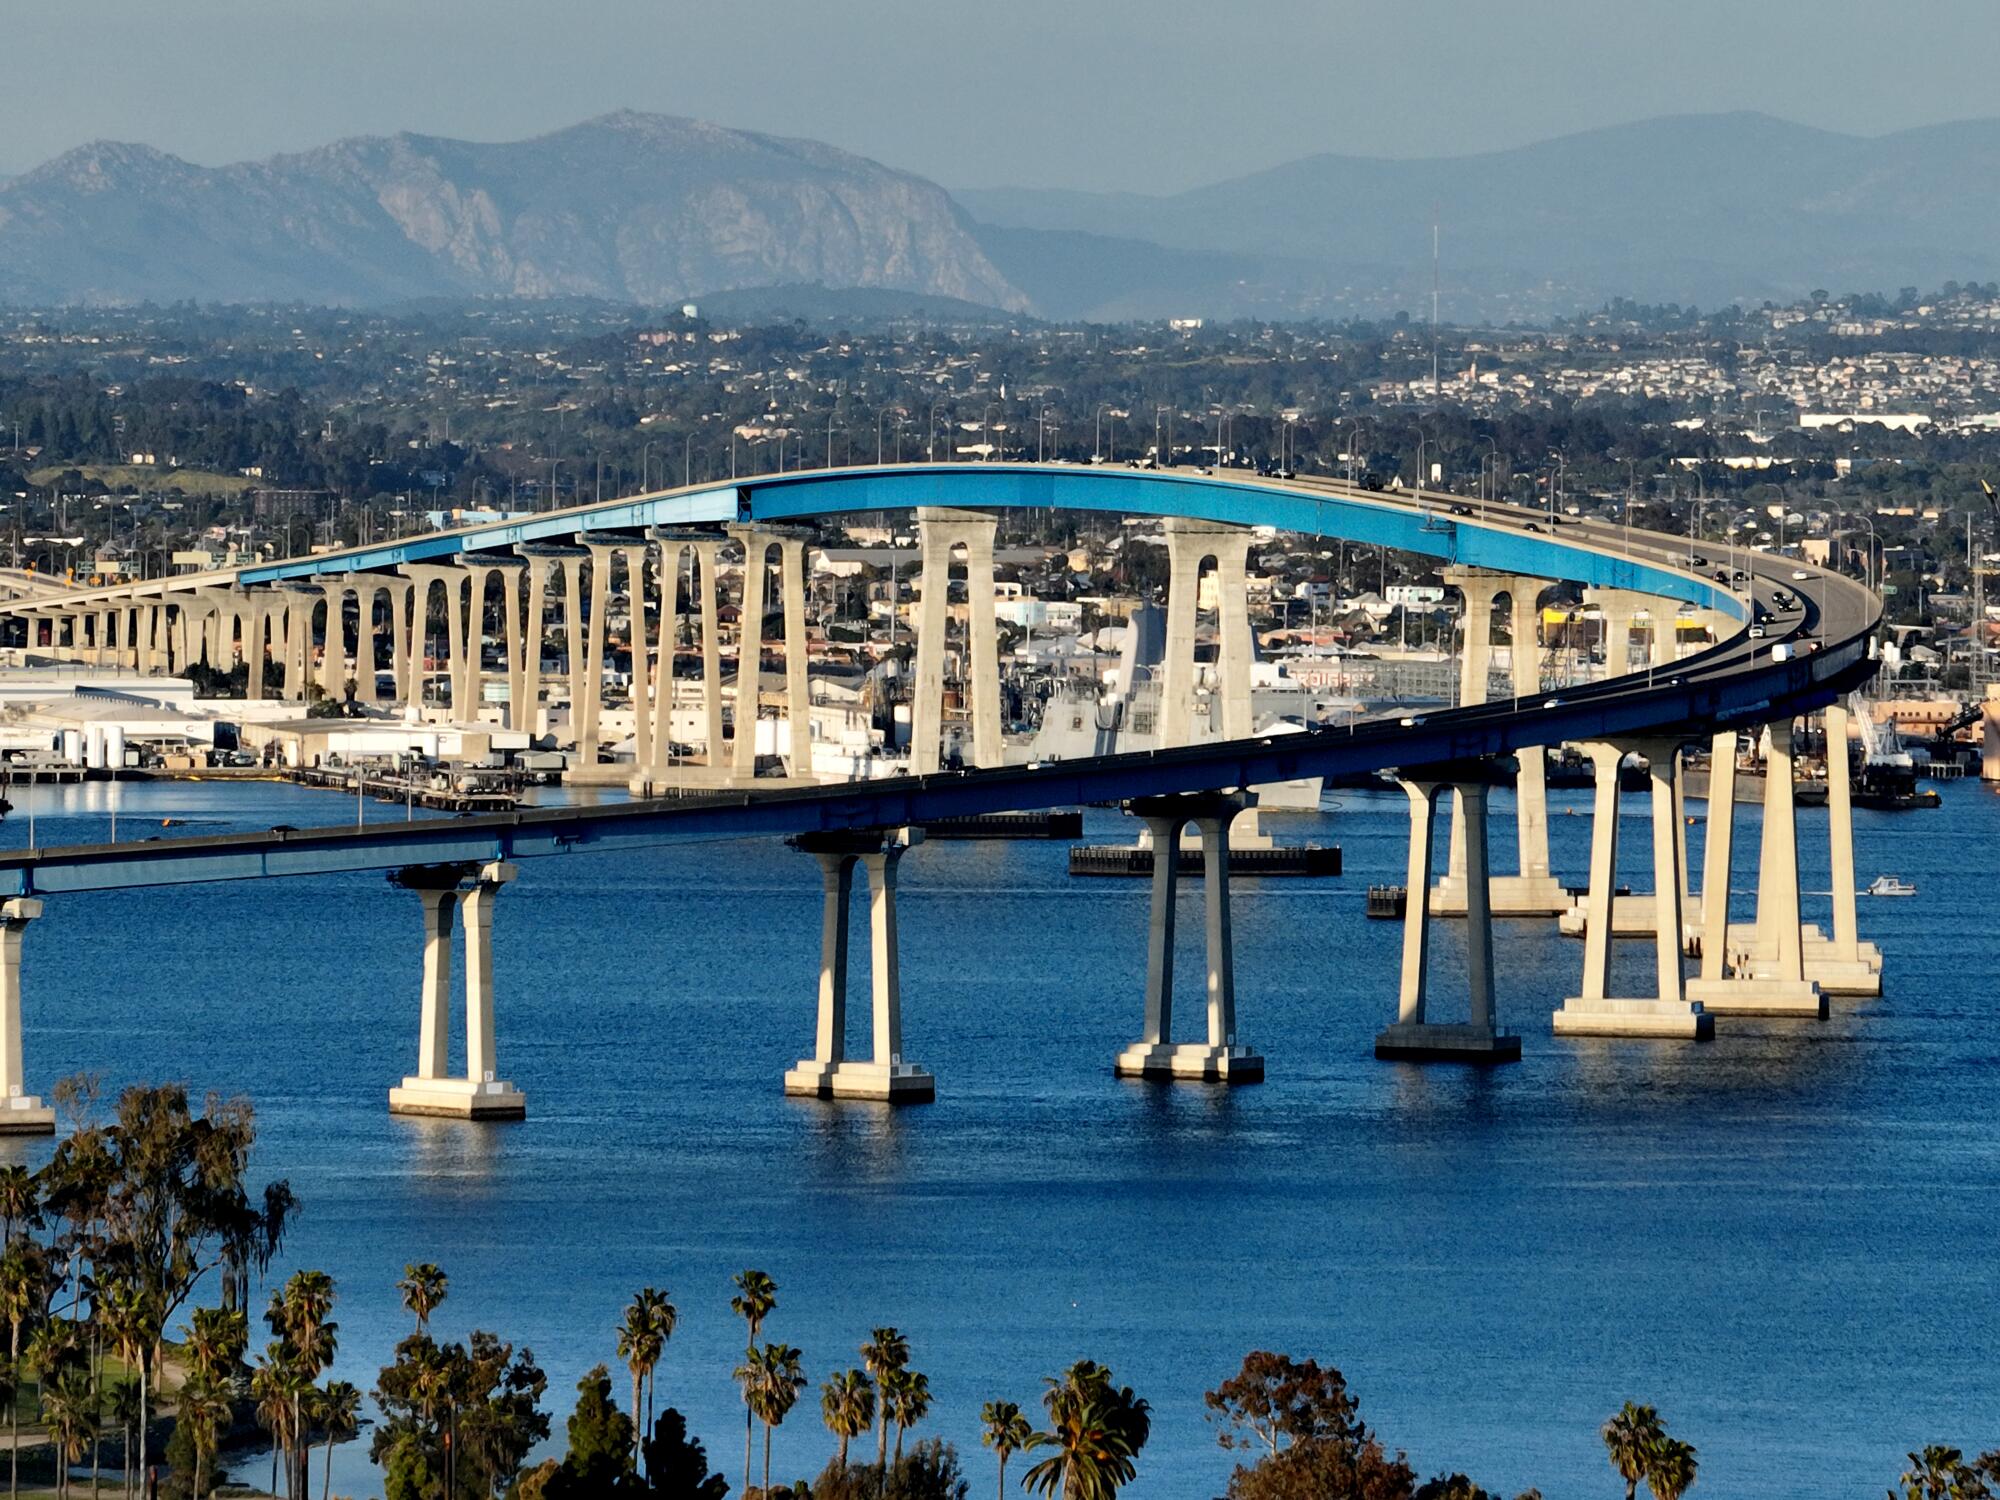 Traffic flows across the San Diego-Coronado Bridge, which connects Coronado and San Diego.